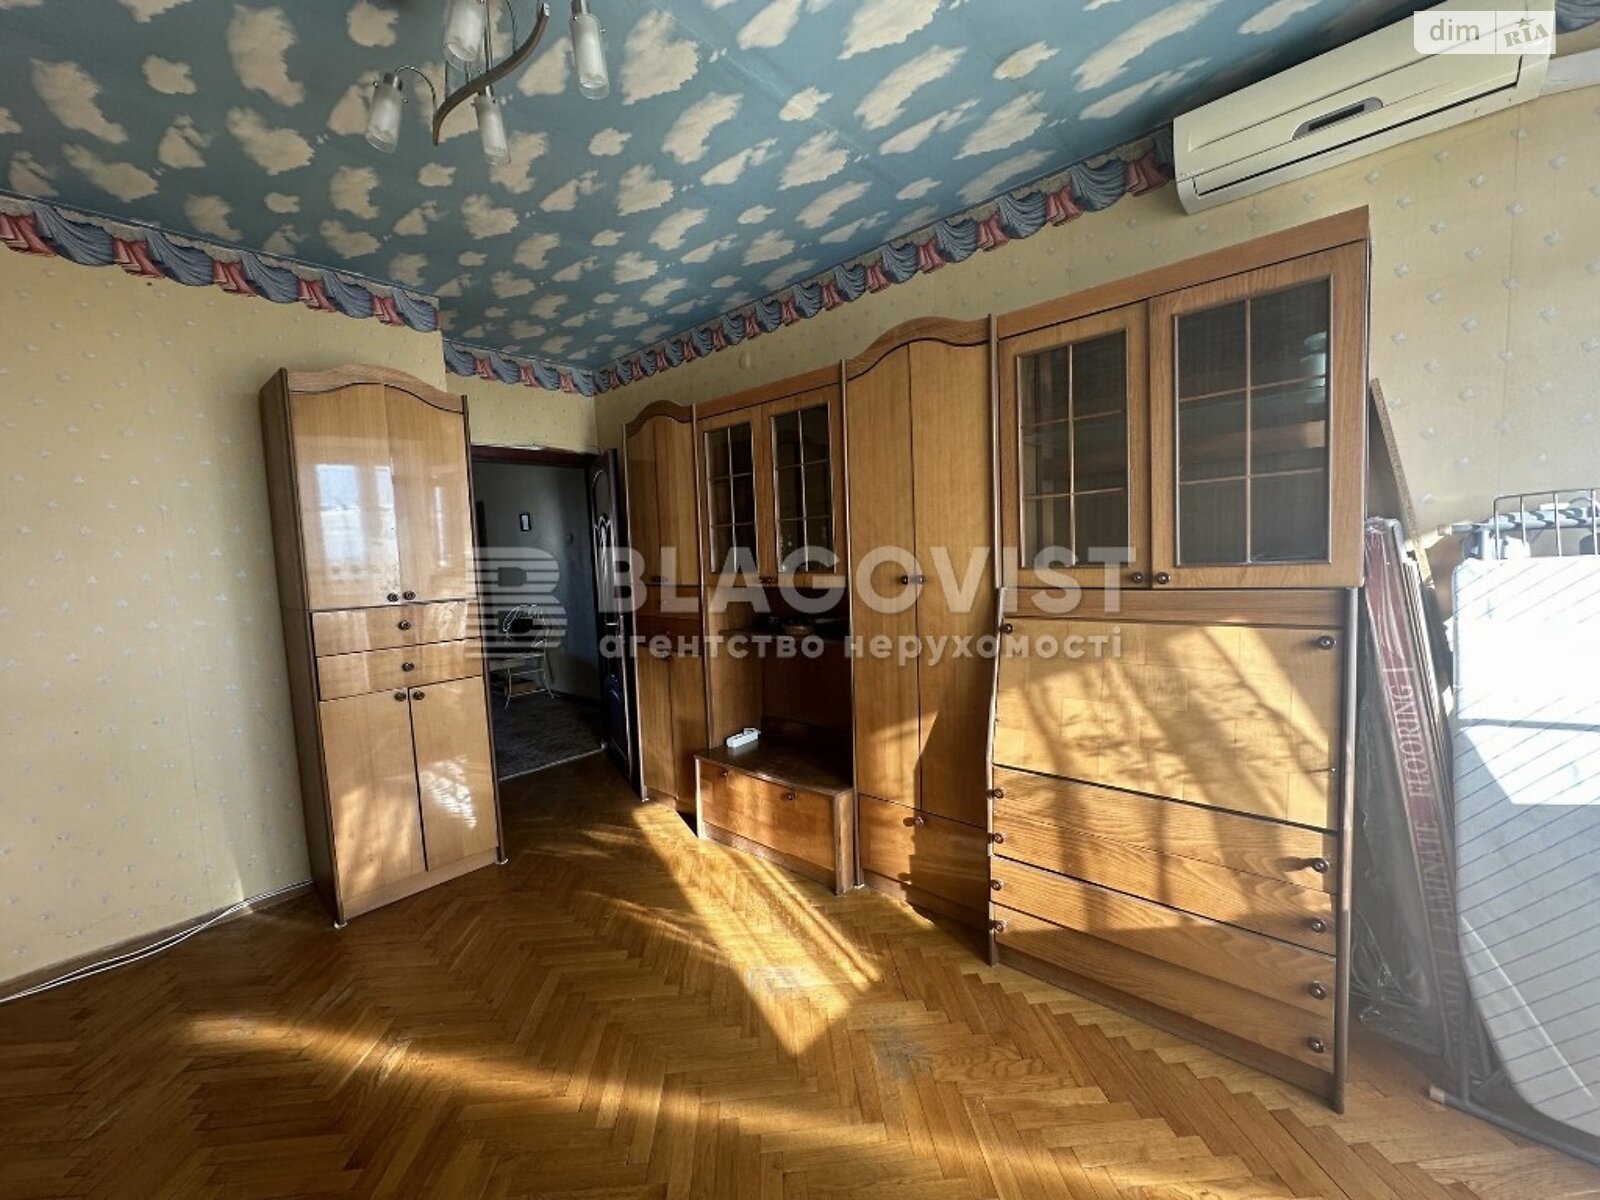 Продажа трехкомнатной квартиры в Киеве, на ул. Петра Болбочана 4А, район Печерский фото 1